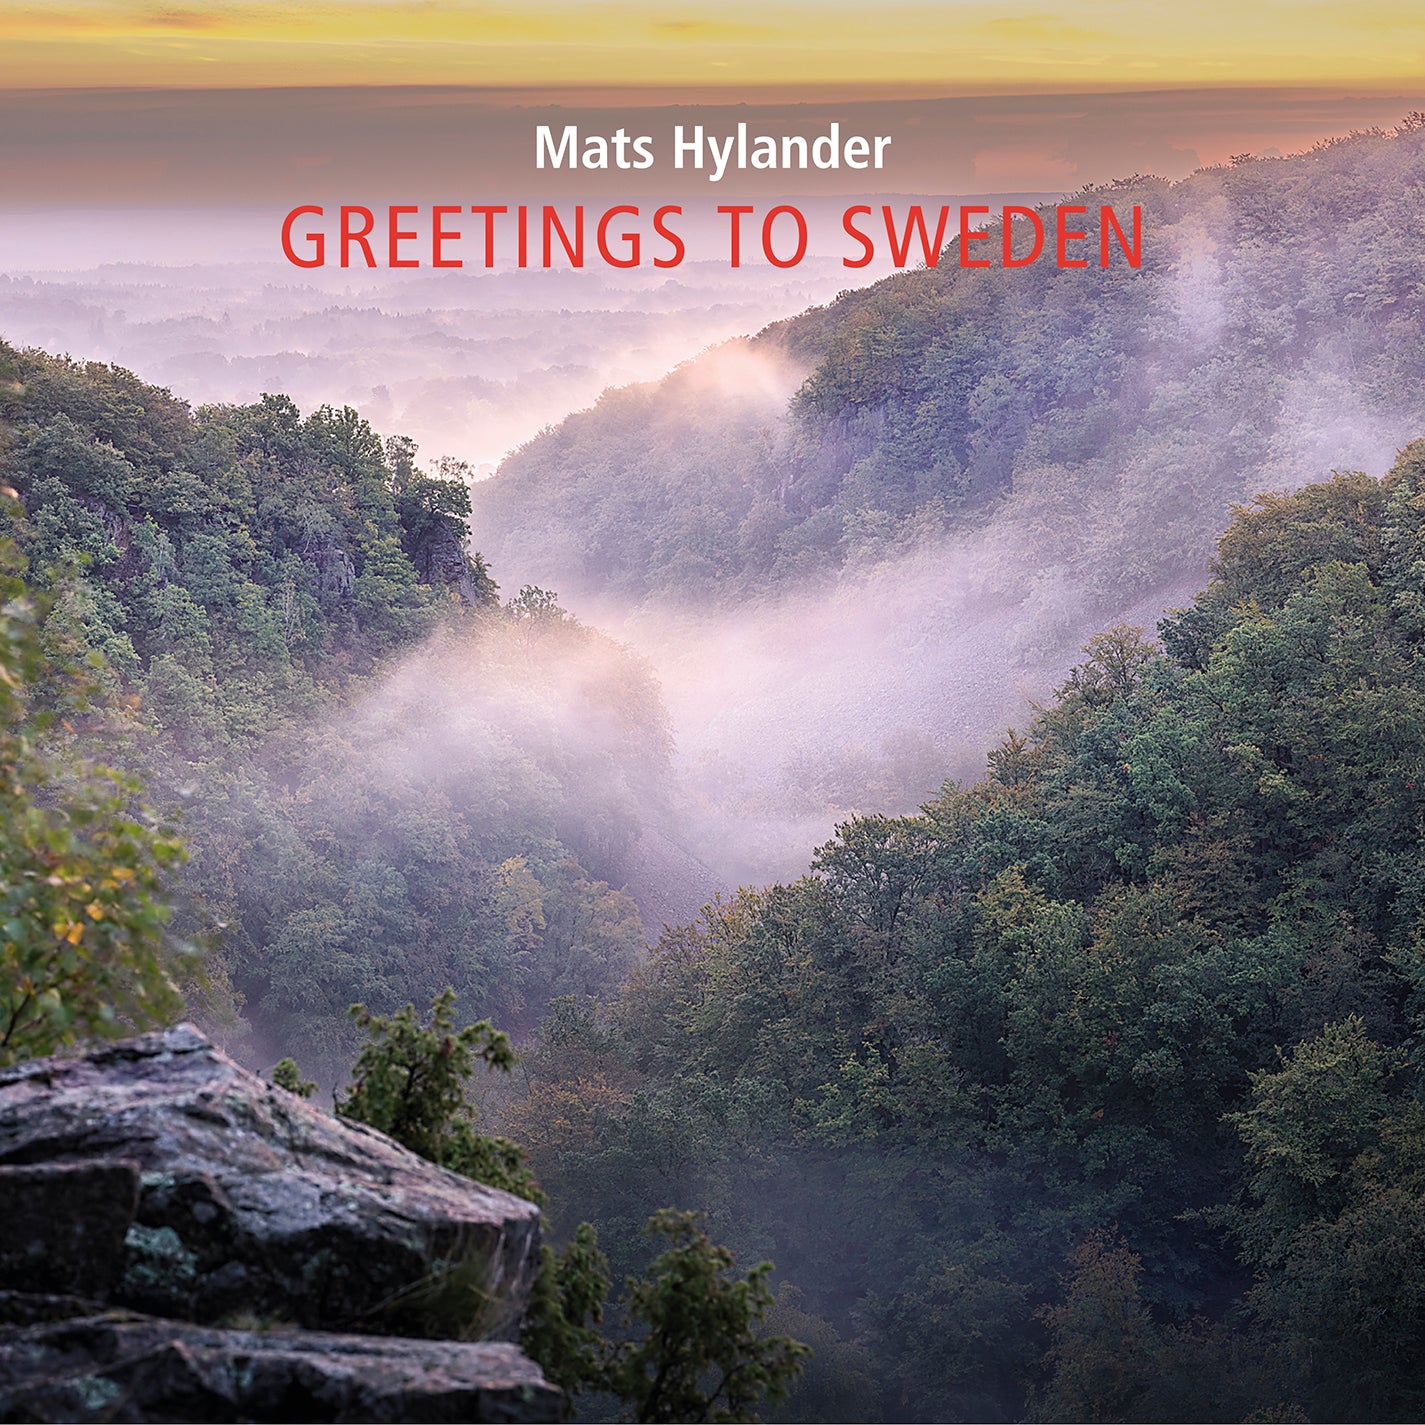 Hylander: Greetings to Sweden